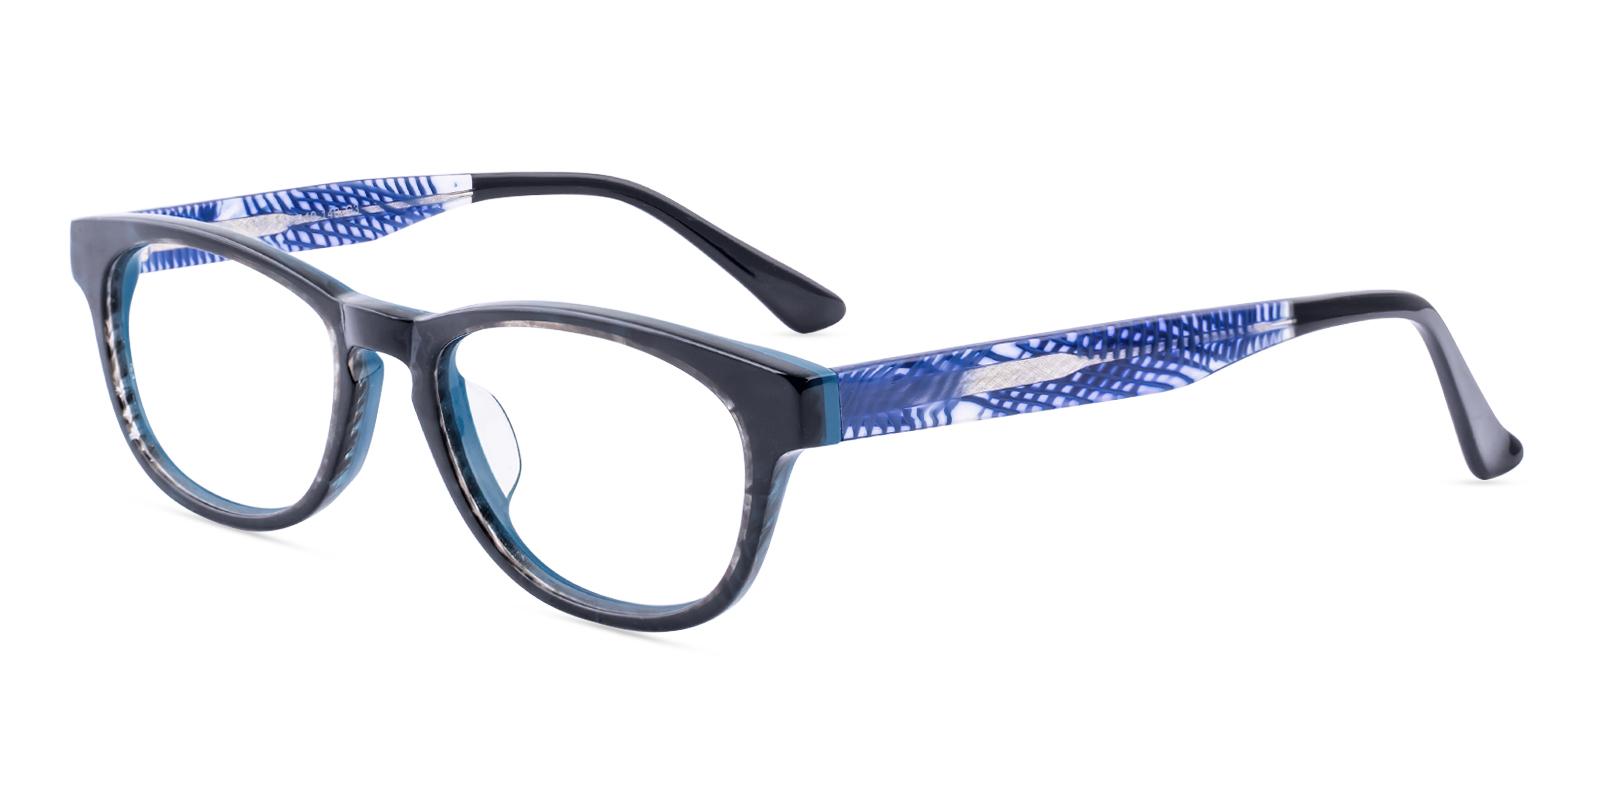 Stimulics Blue Acetate Eyeglasses , UniversalBridgeFit Frames from ABBE Glasses